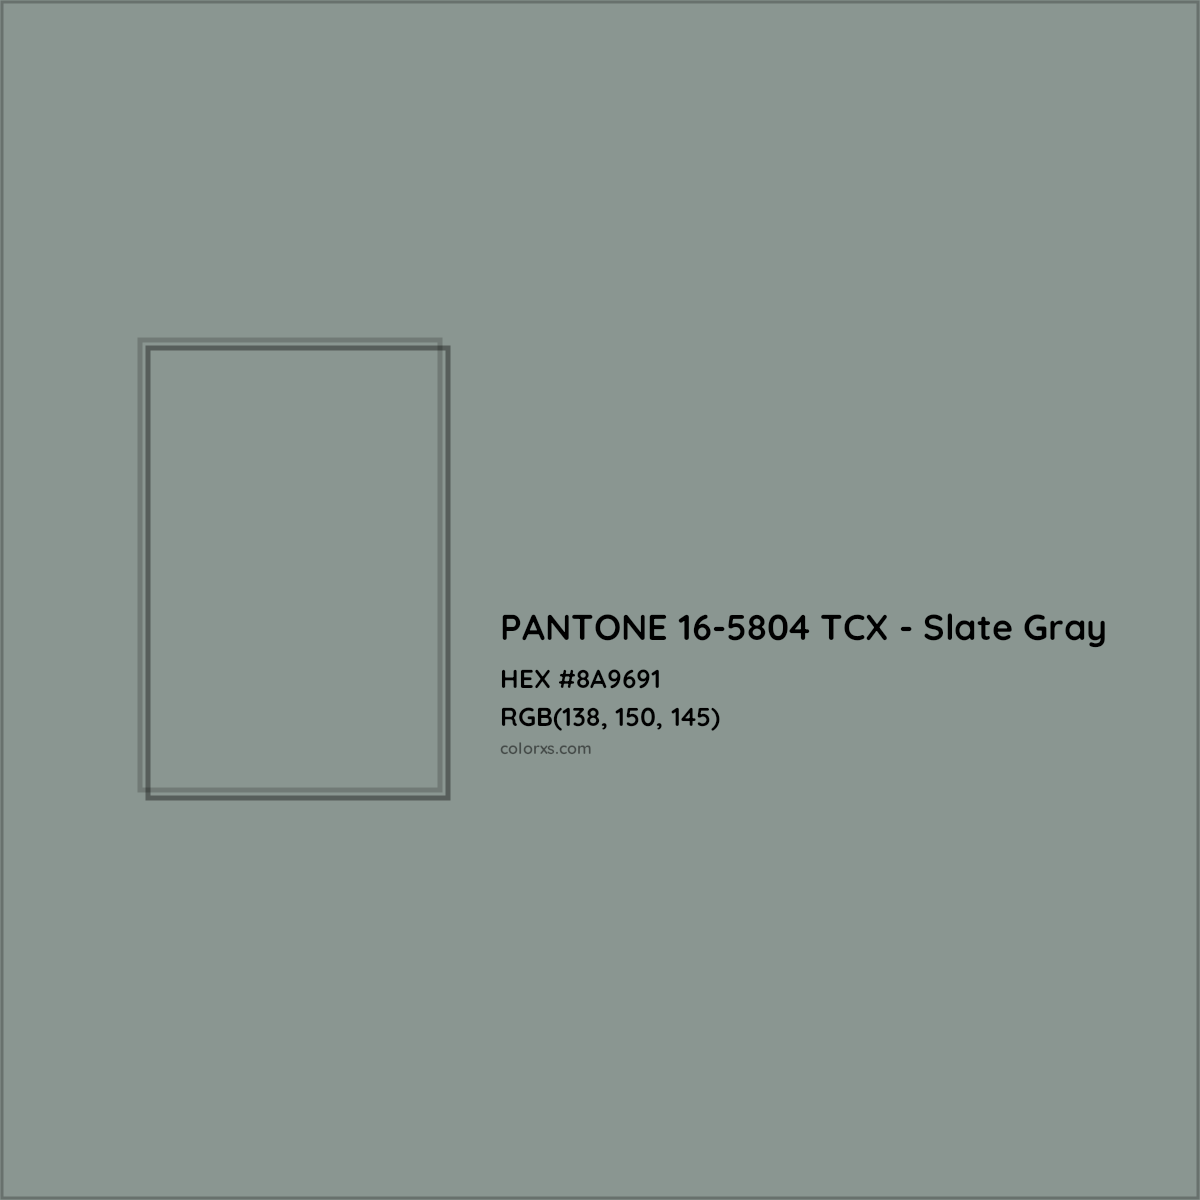 HEX #8A9691 PANTONE 16-5804 TCX - Slate Gray CMS Pantone TCX - Color Code